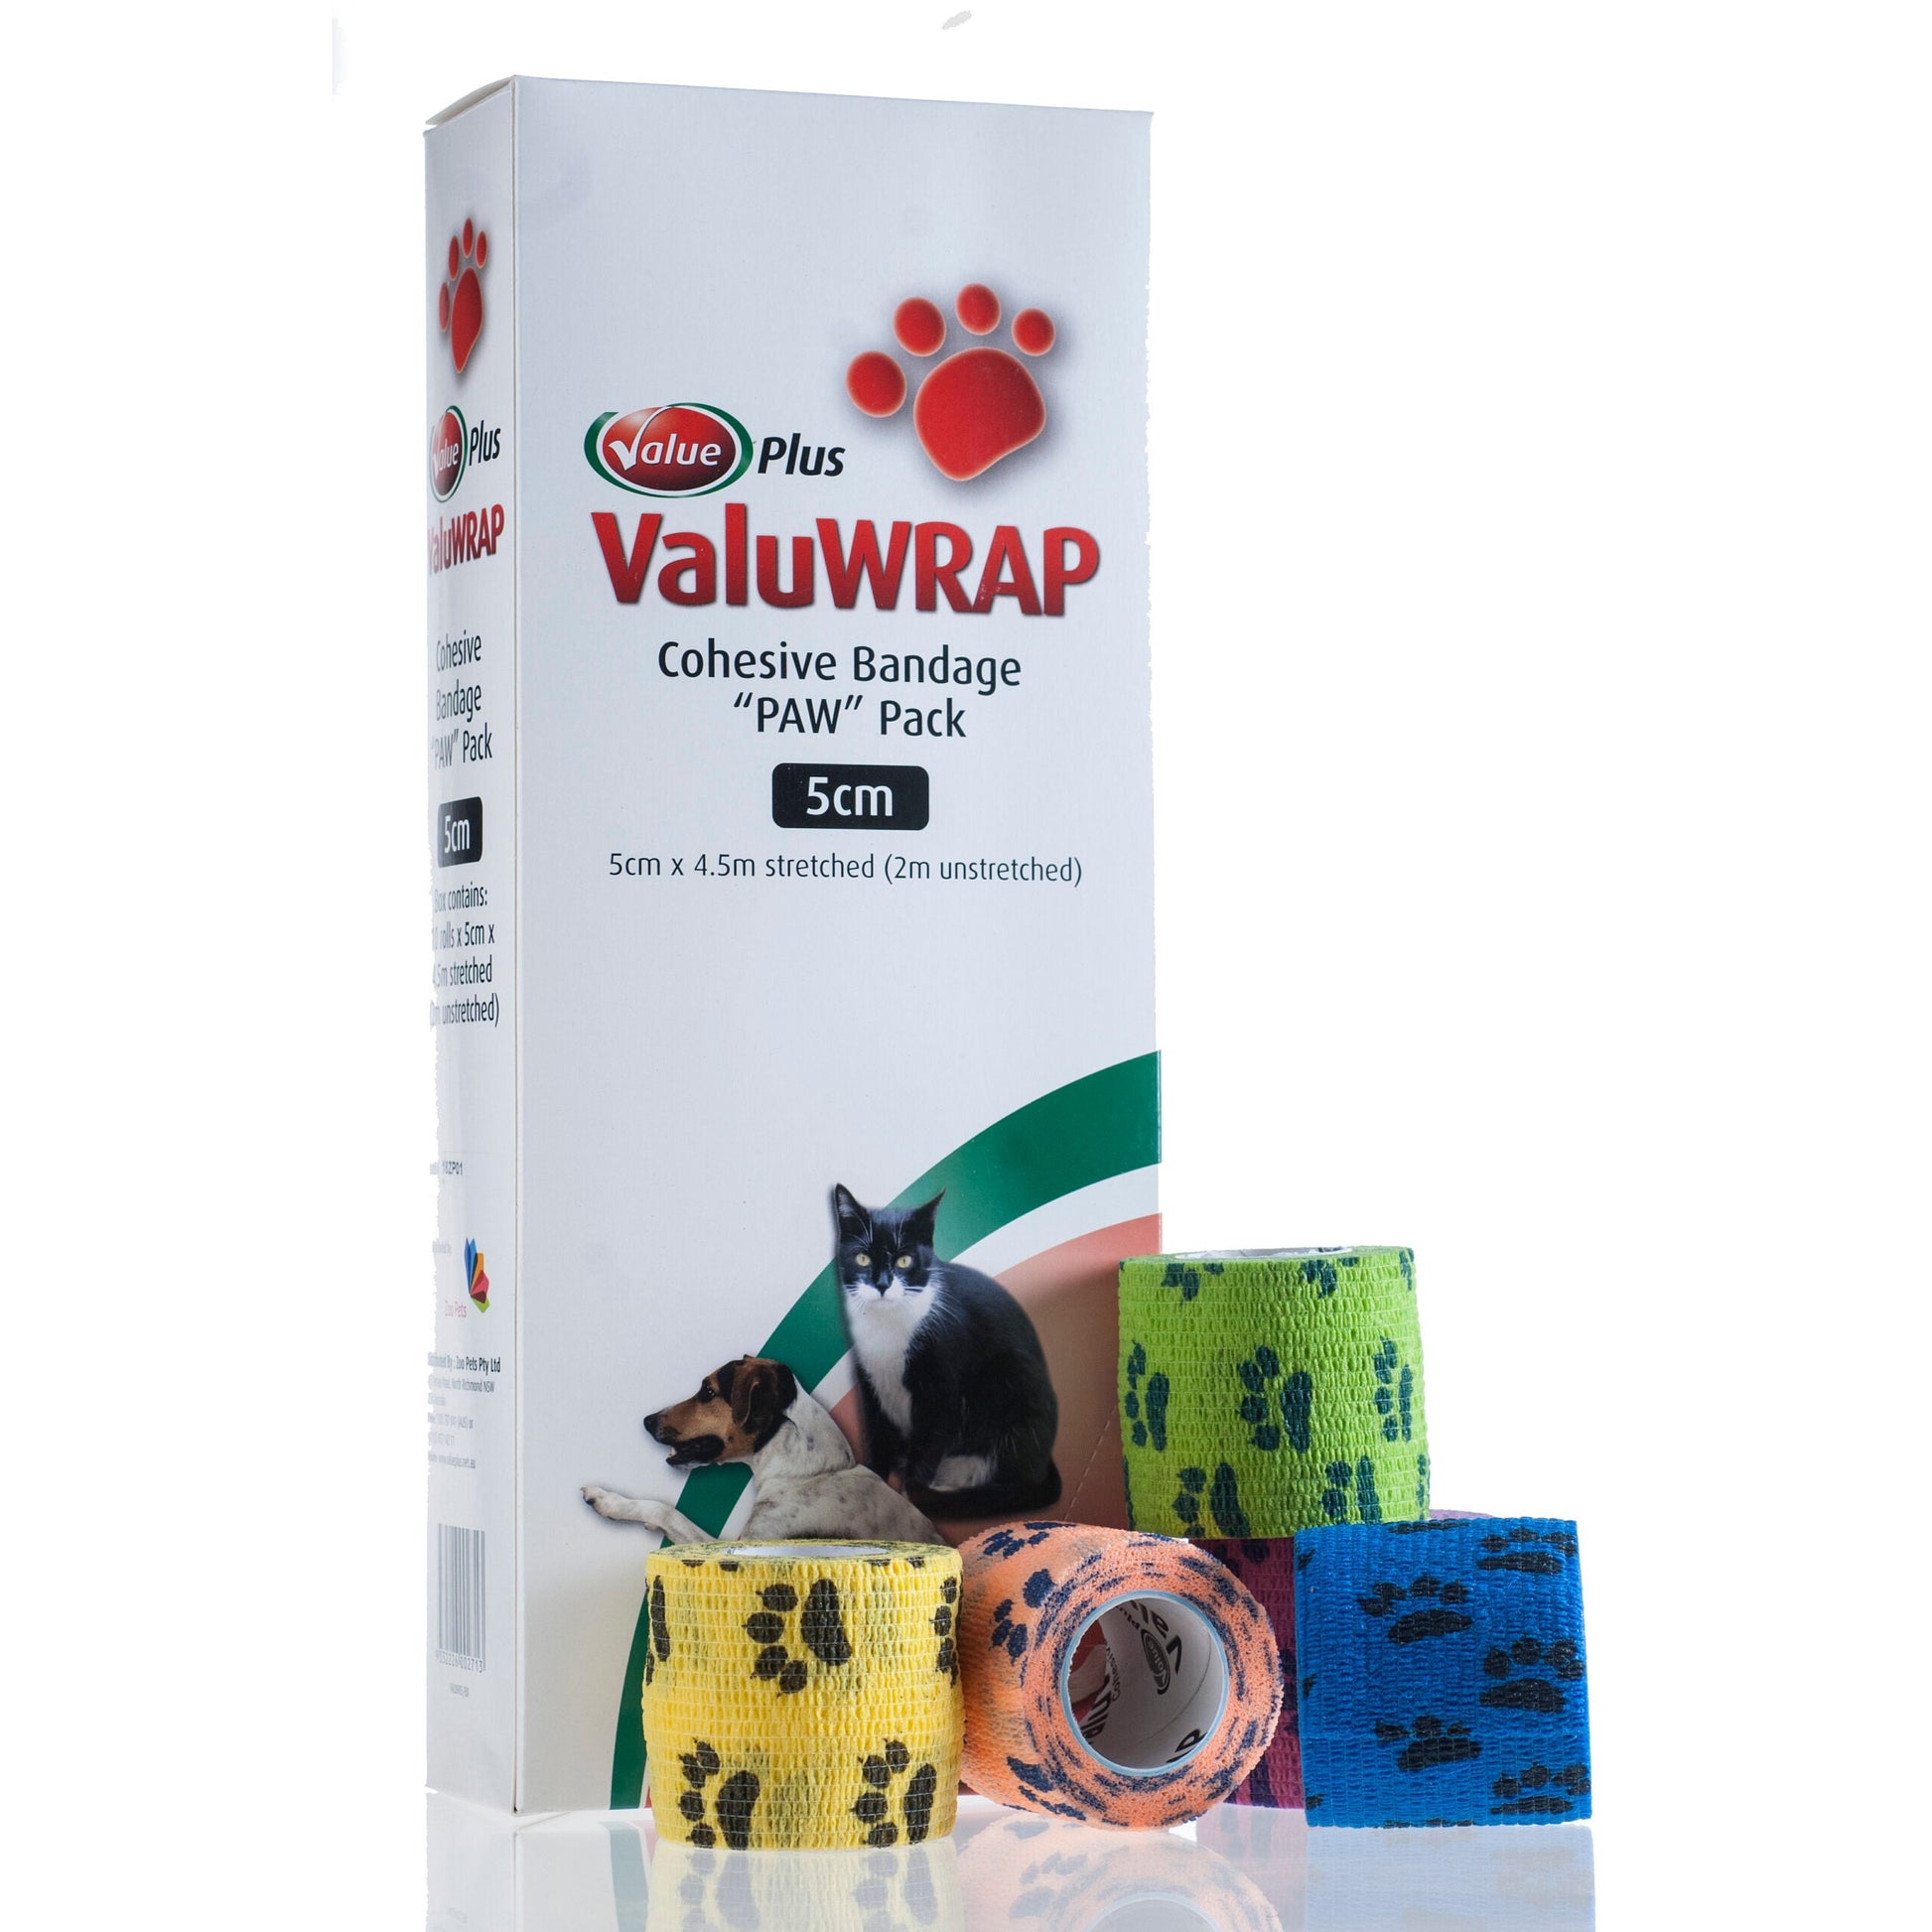 5cm ValuWRAP box and rolls